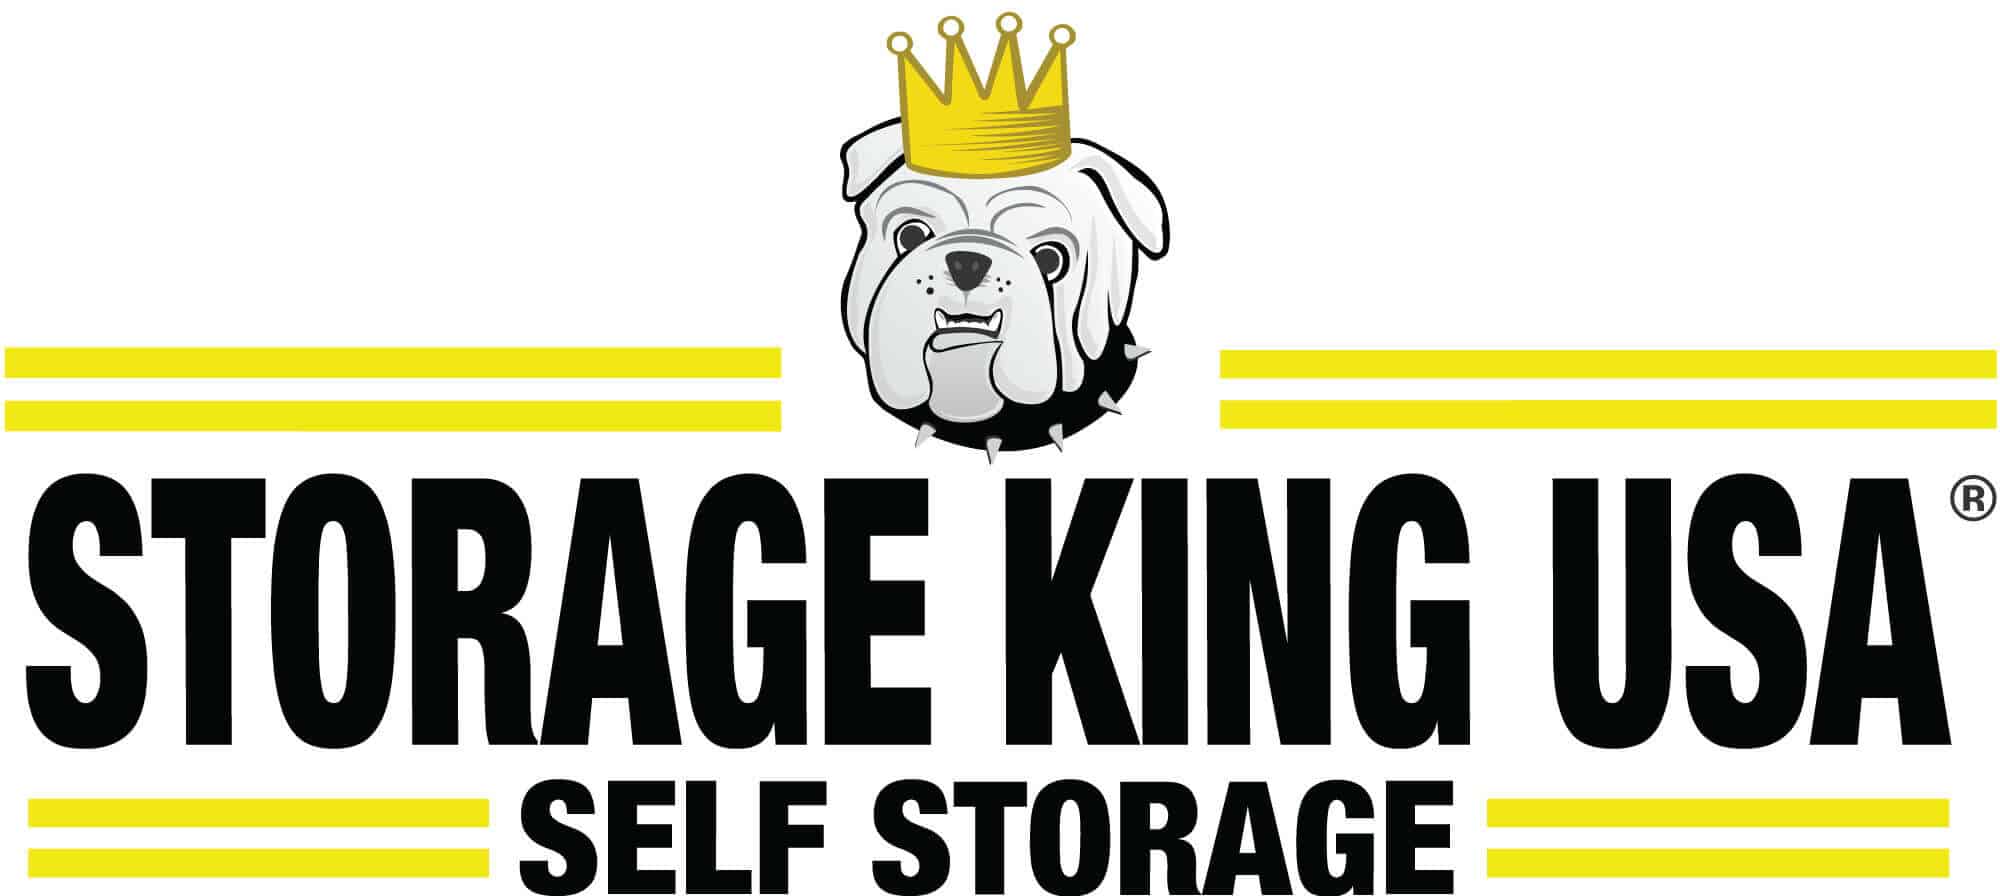 Self Storage Units | Storage King USA